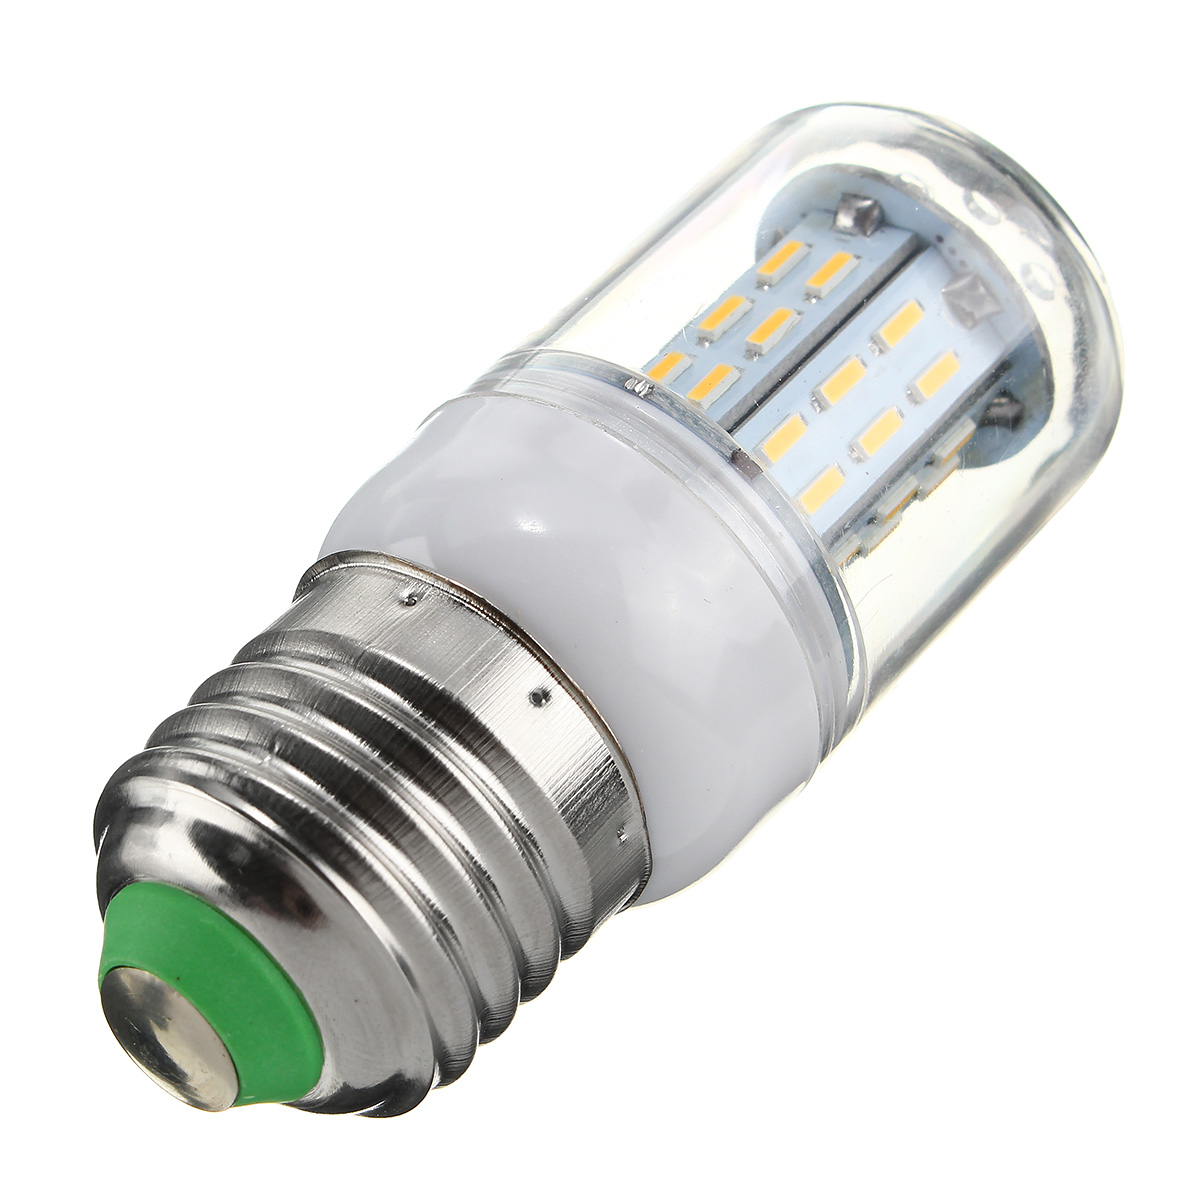 Dimmable-E27-E14-E12-B22-GU10-G9-SMD4014-4W-LED-Corn-Bulb-Light-Lamp-AC110V-1126662-8